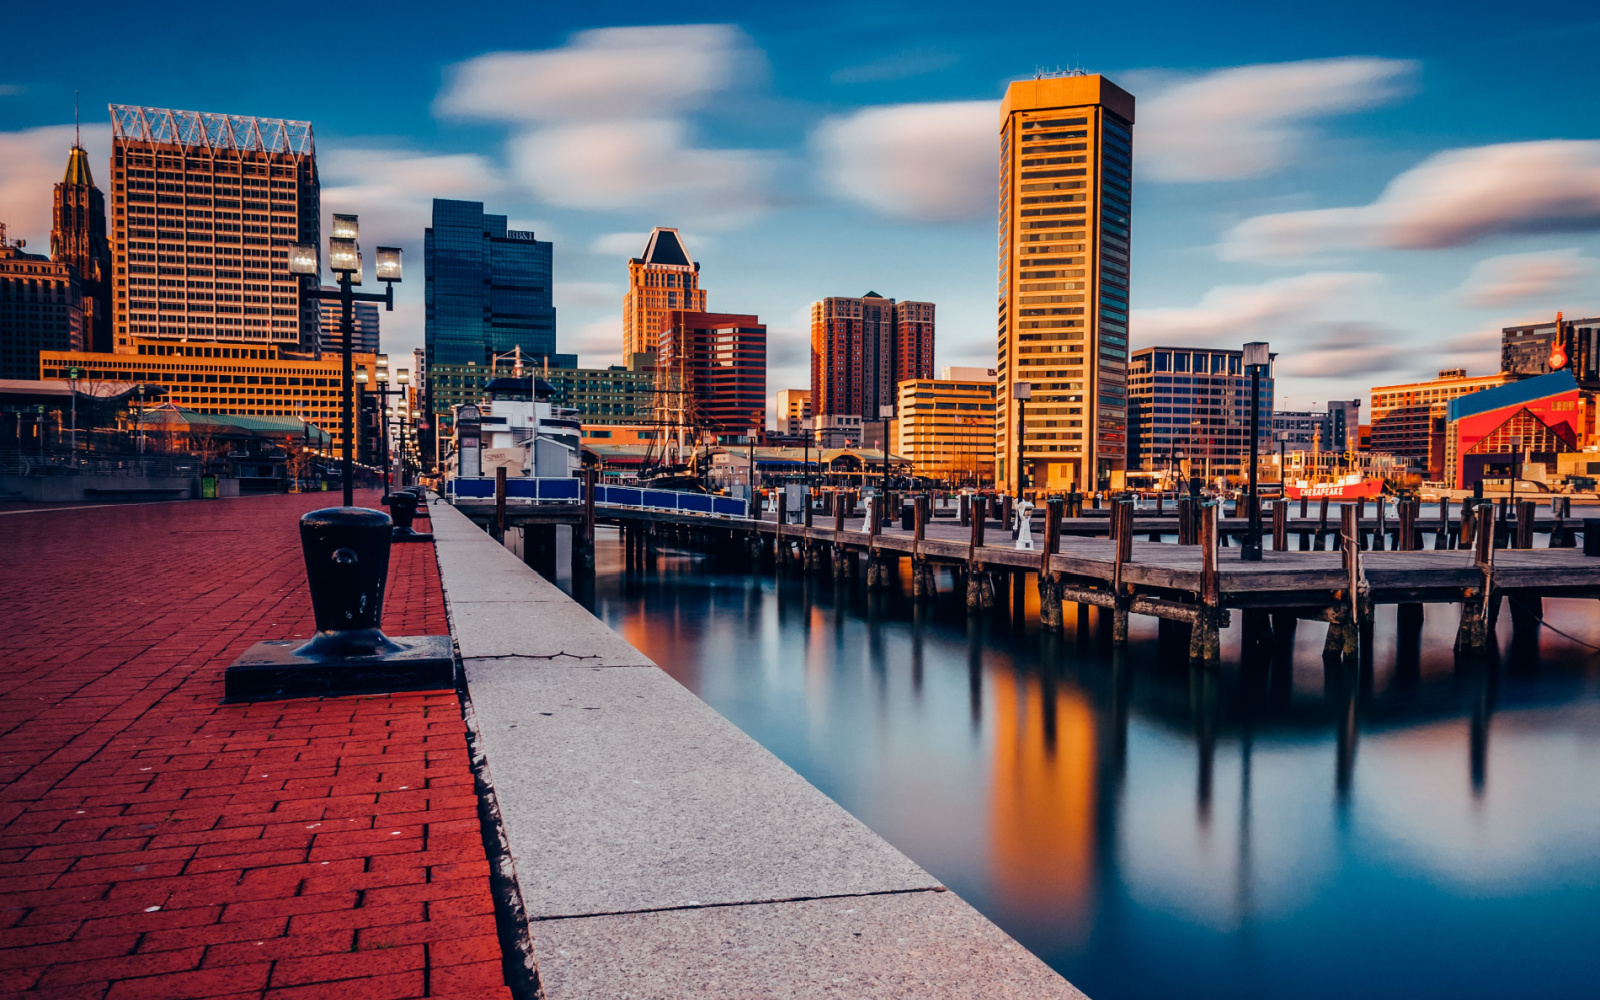 Is Baltimore Safe? | Travel Tips & Safety Concerns